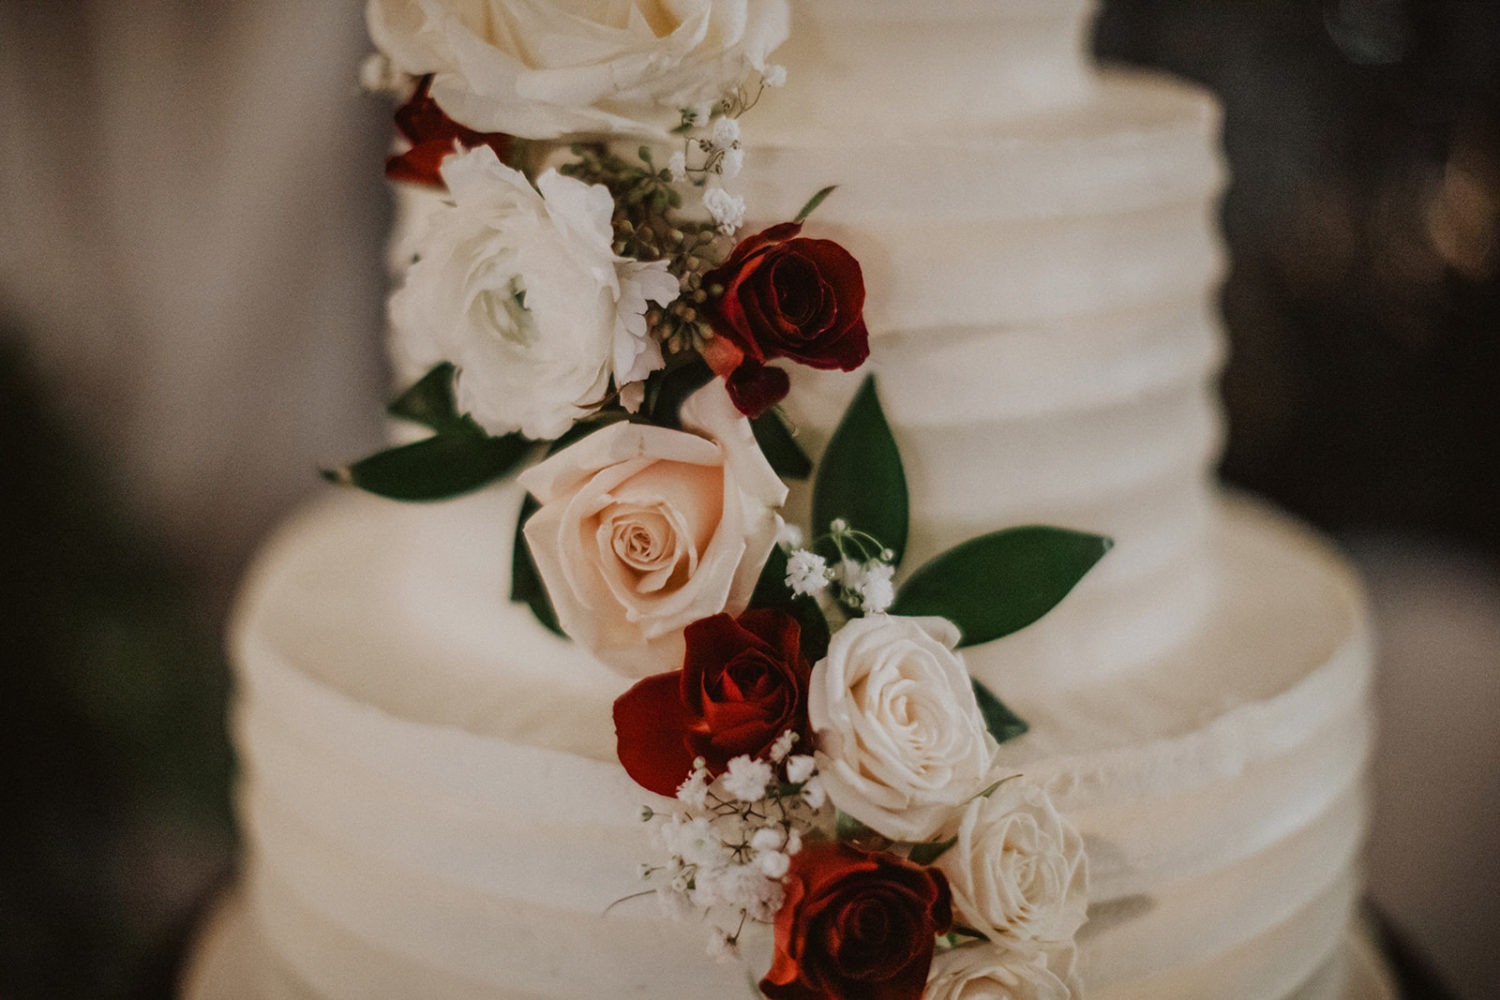 Wedding flowers on white 3-tier wedding cake